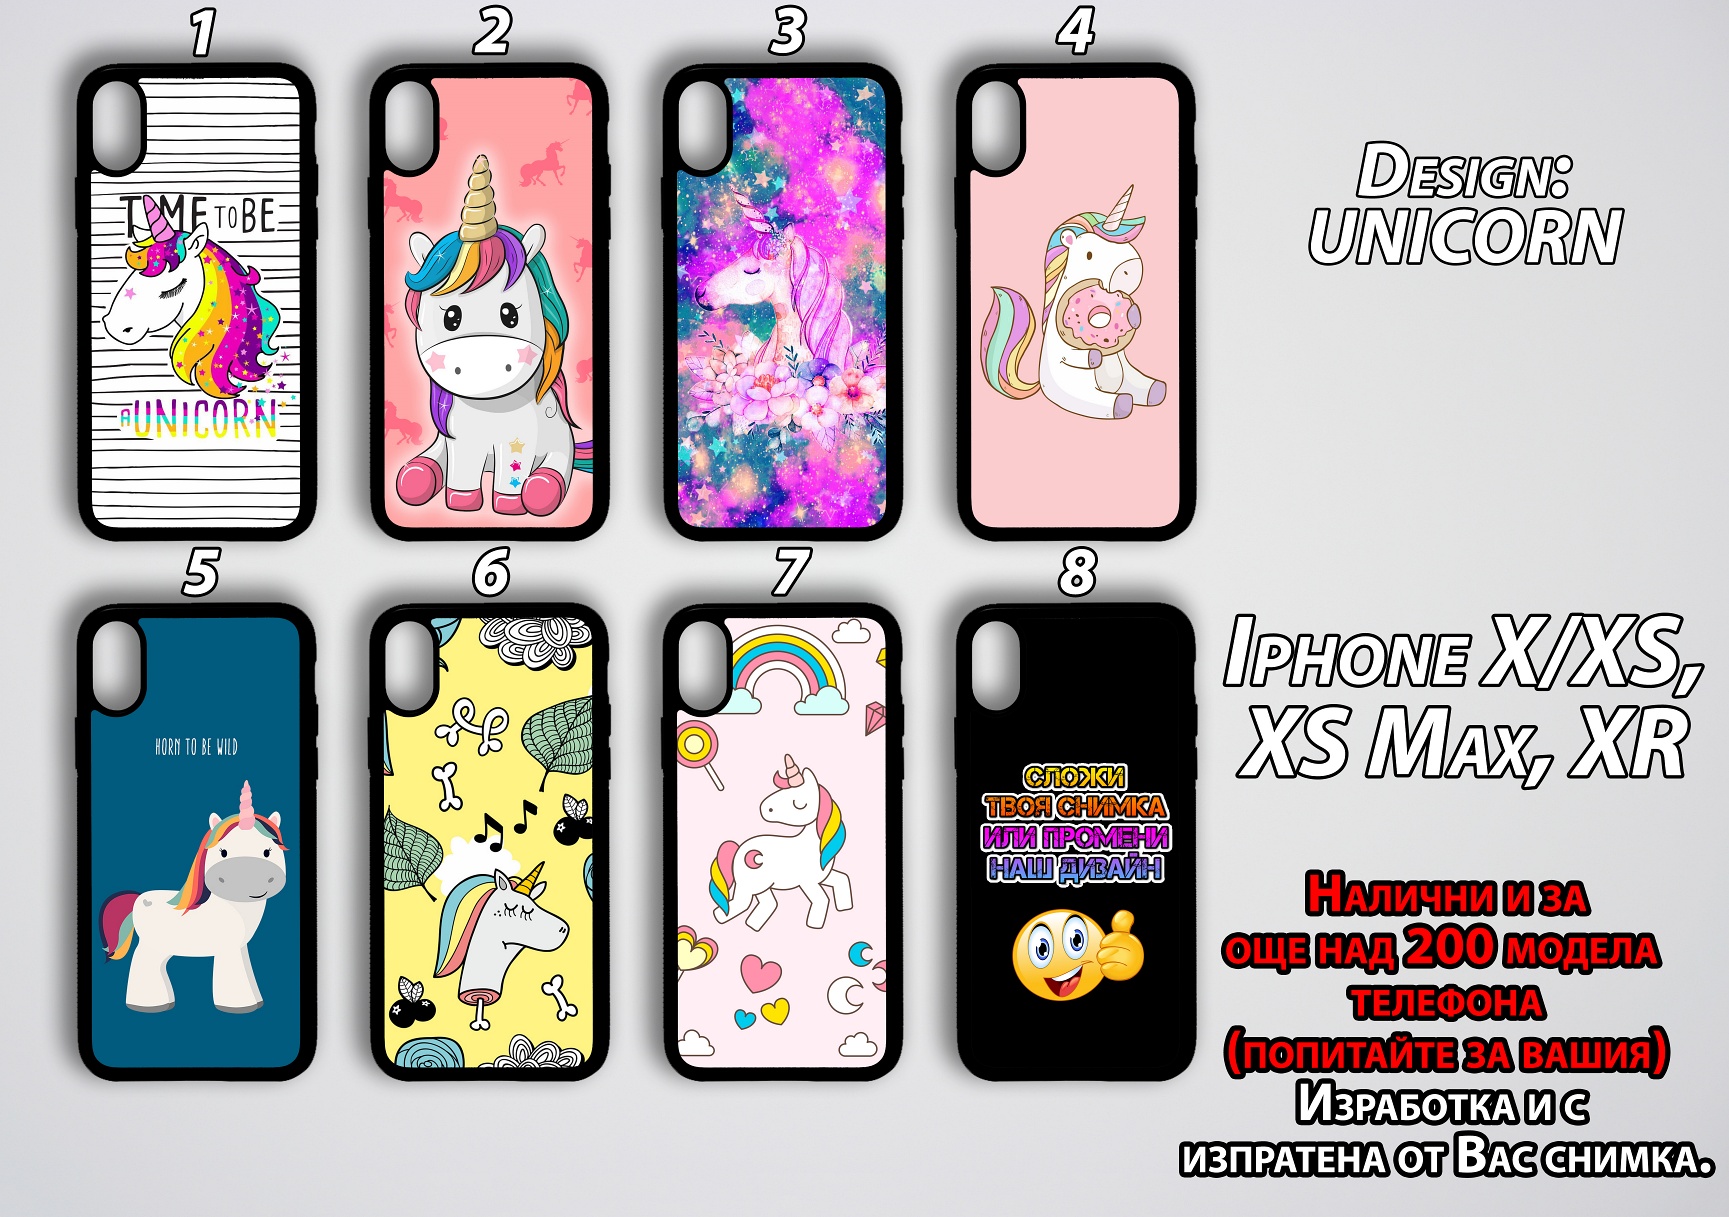 mobile phone cases Unicorn 1